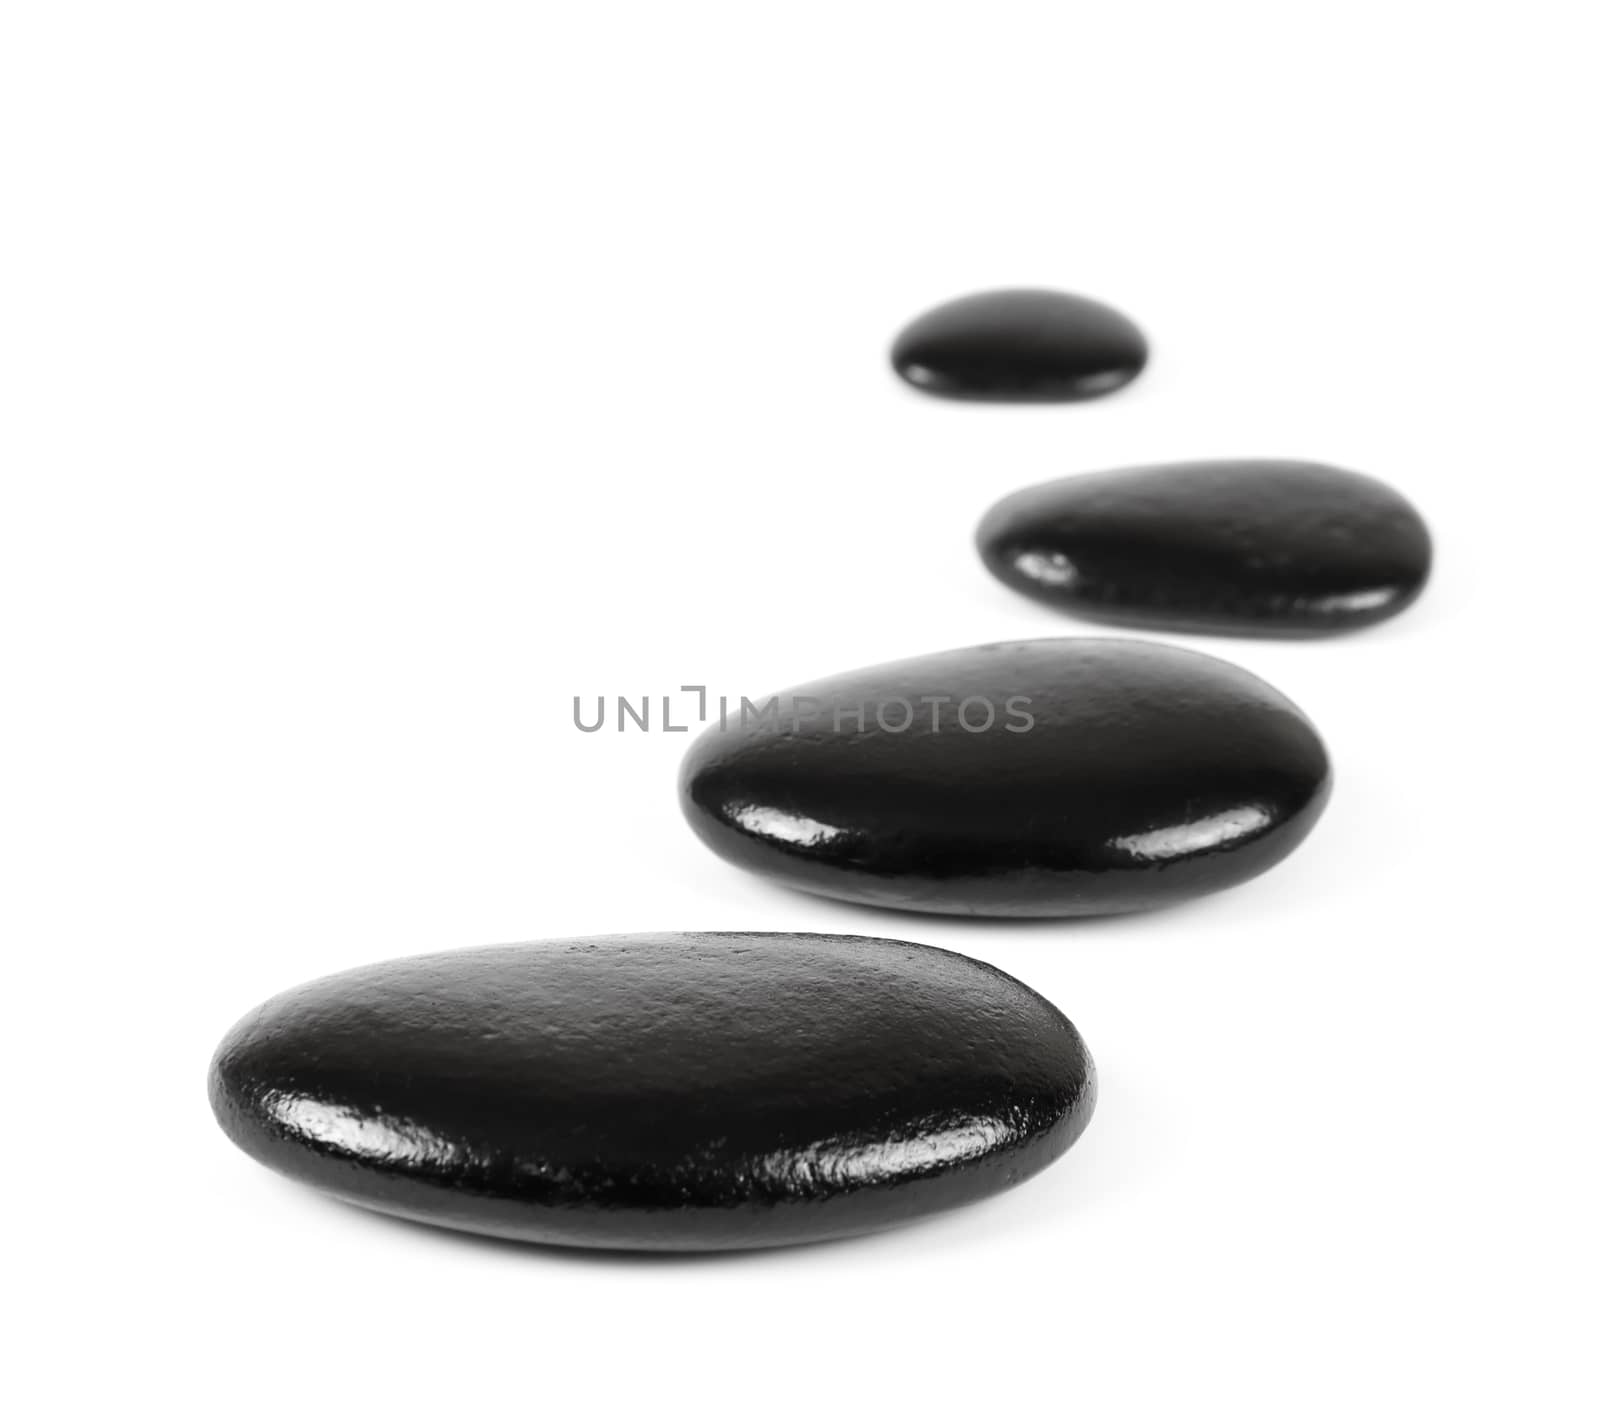 Black stones over white background by Bedolaga